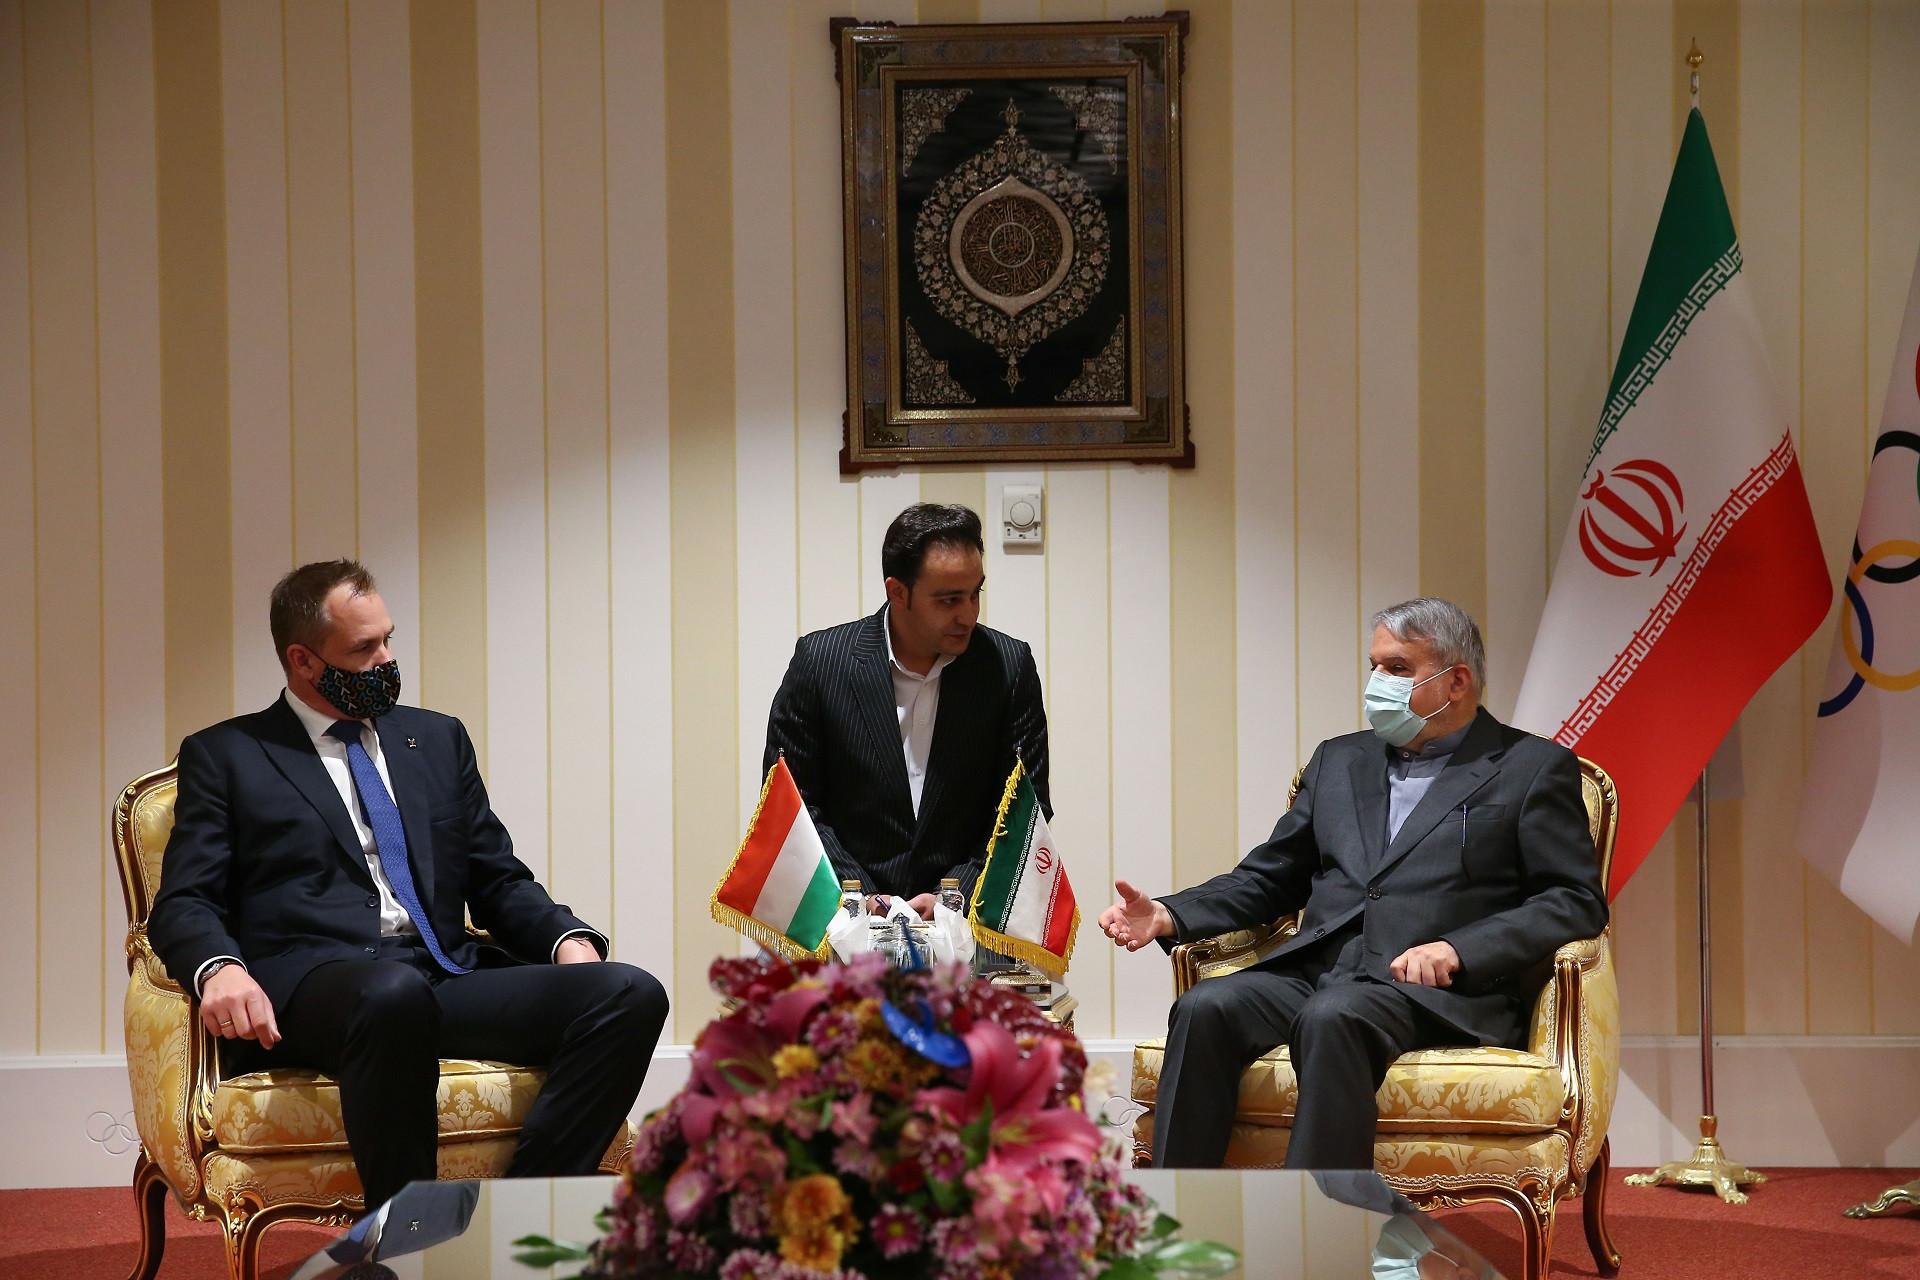 NOCs of Hungary and Iran sign Memorandum of Understanding covering 11 sports